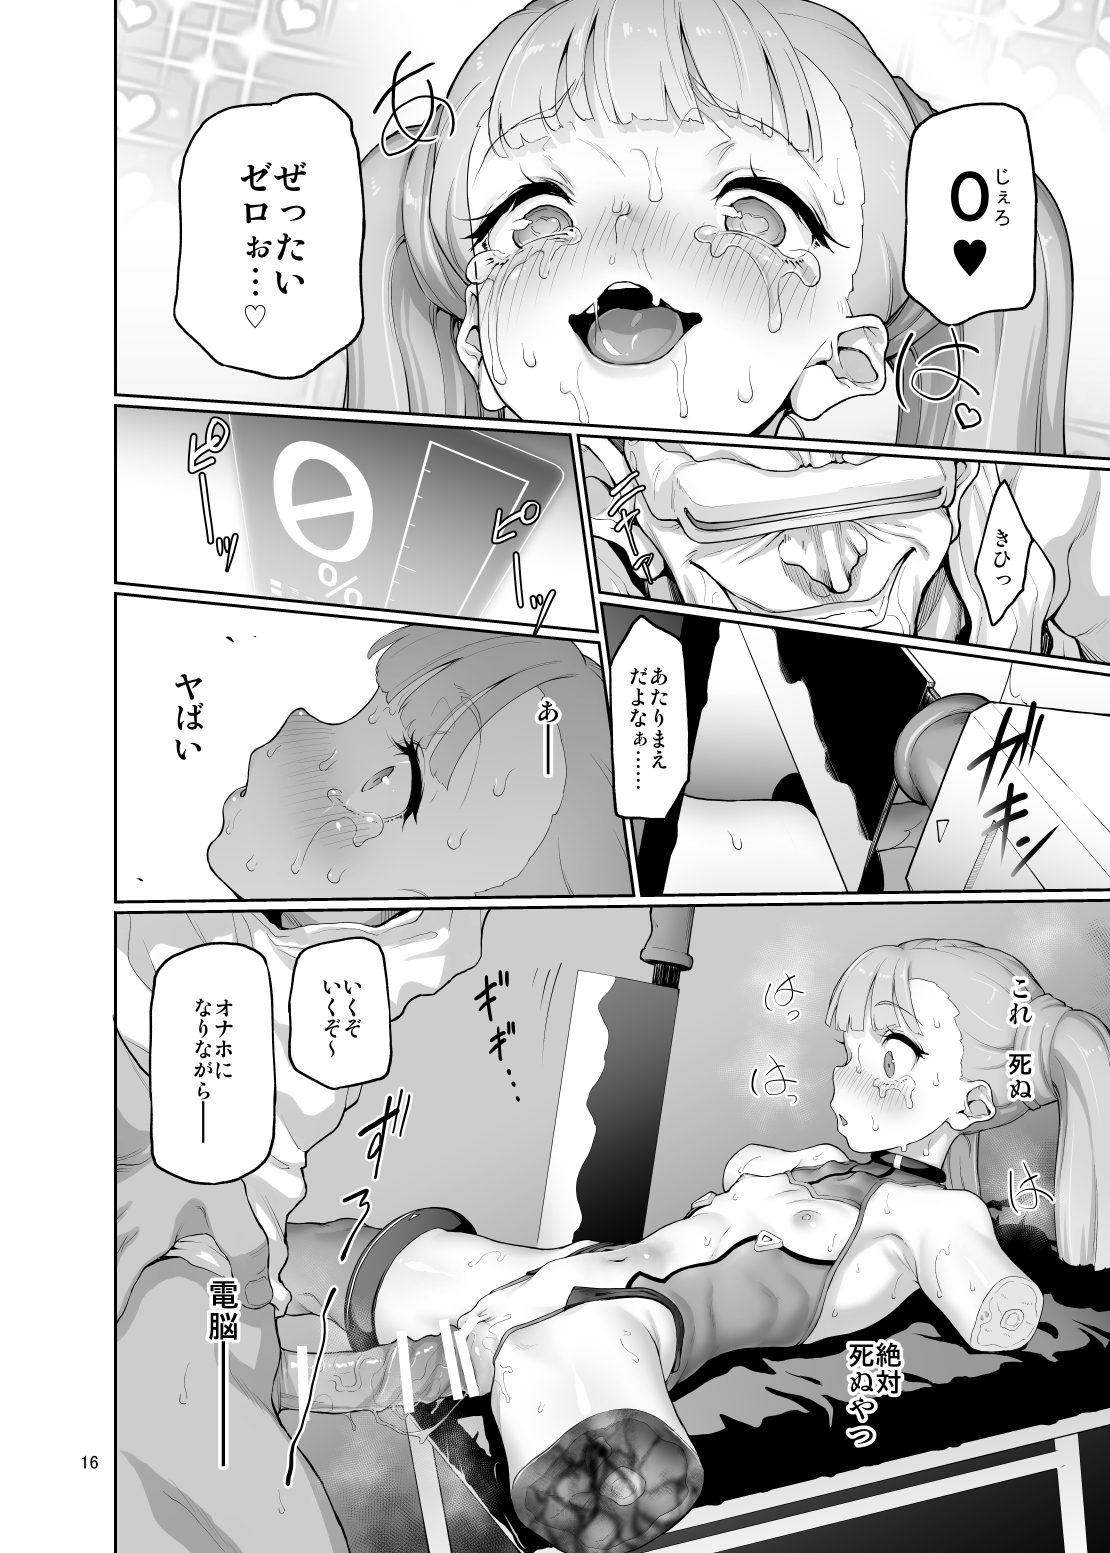 Read Gokusaishiki Aya Shachou S E T Digital Hentai Porns Manga And Porncomics Xxx